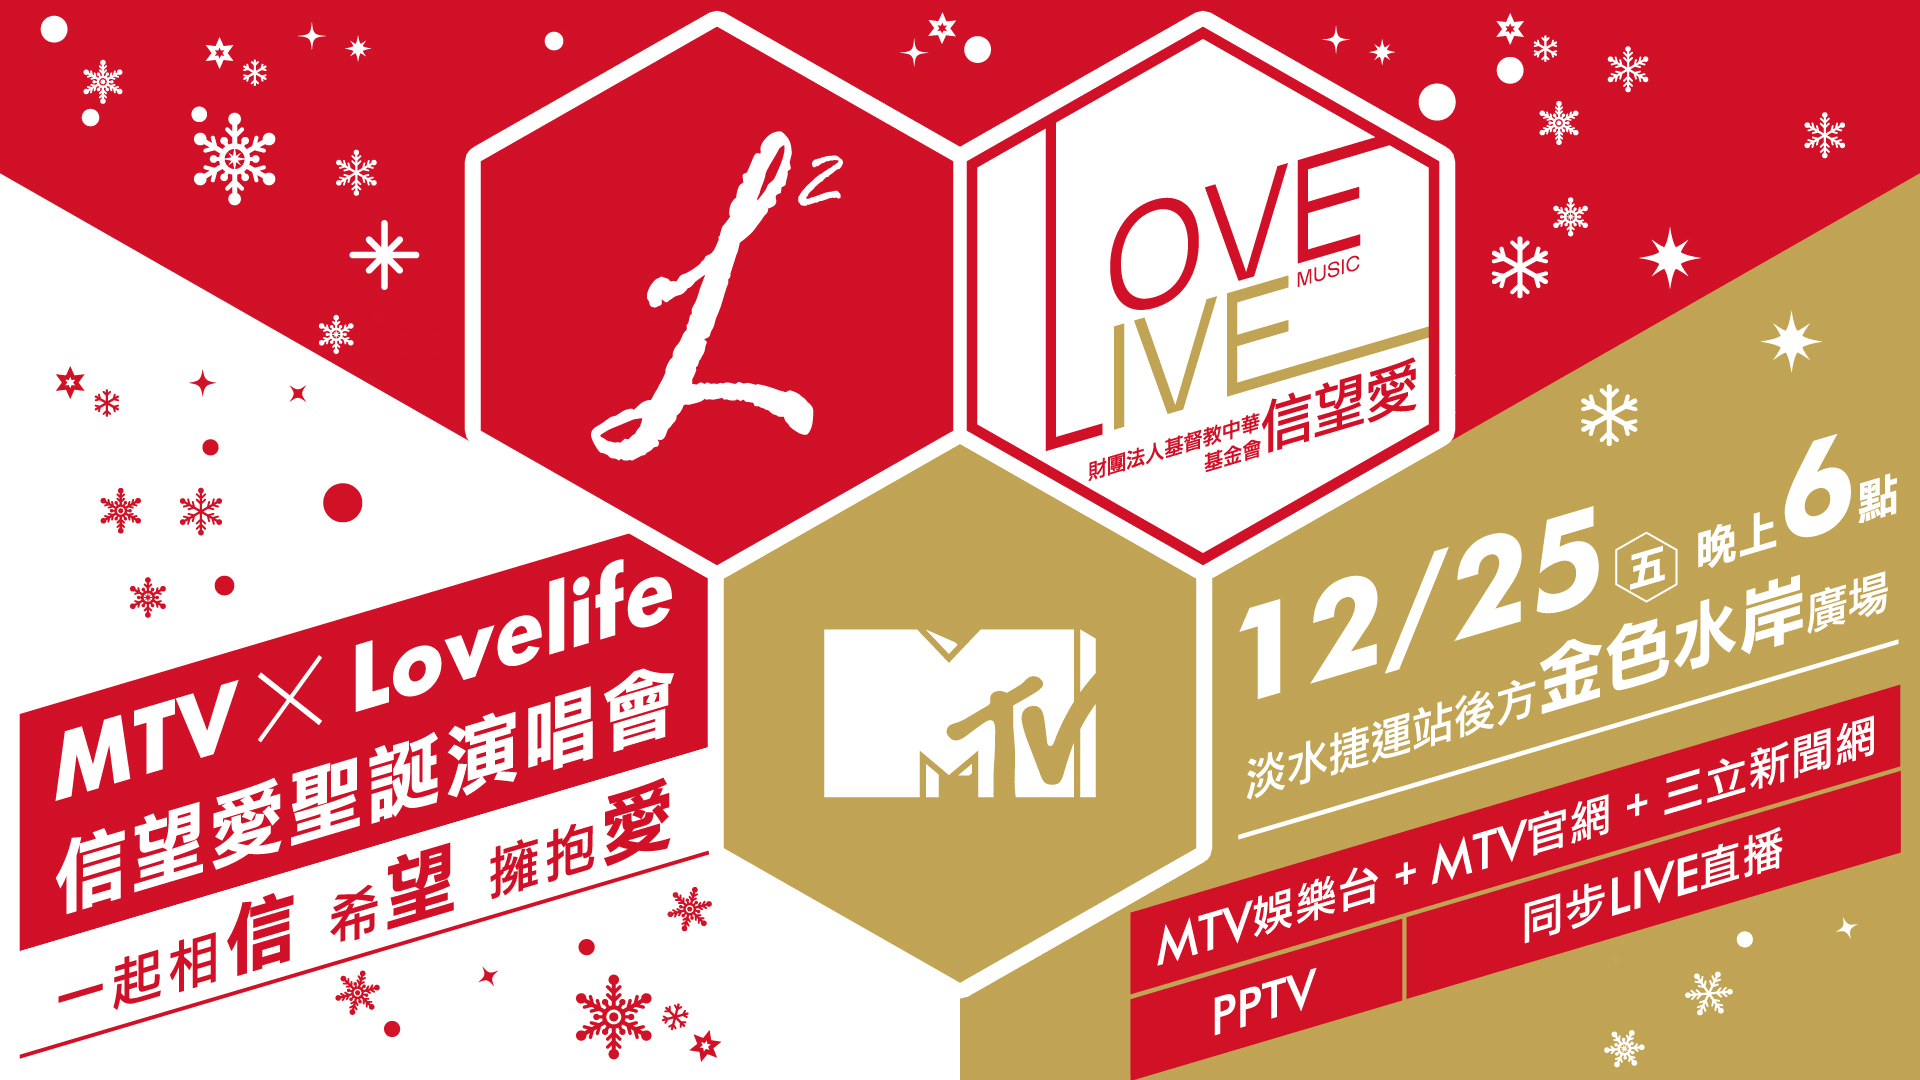 Lovelife聖誕演唱會-YouTube字卡